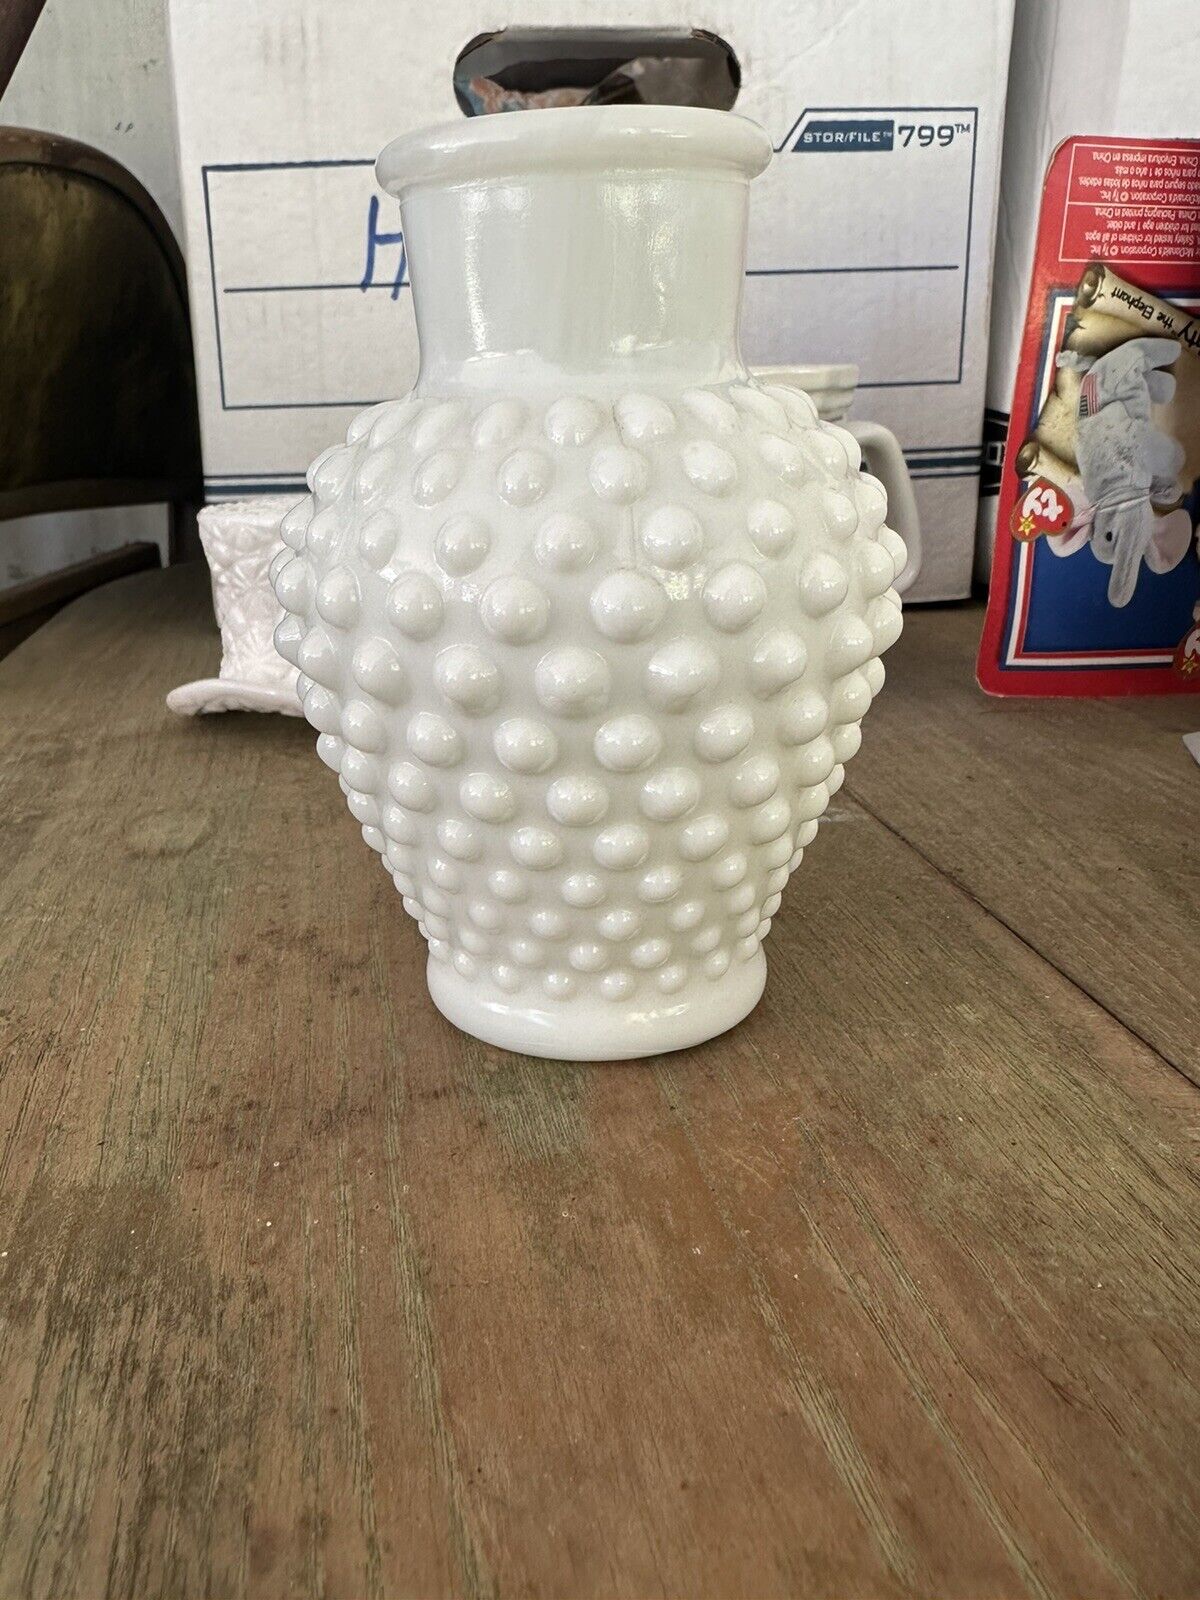 6” Vintage Fenton White Milk Glass Hobnail Round Bud Vase Flowers Dotted